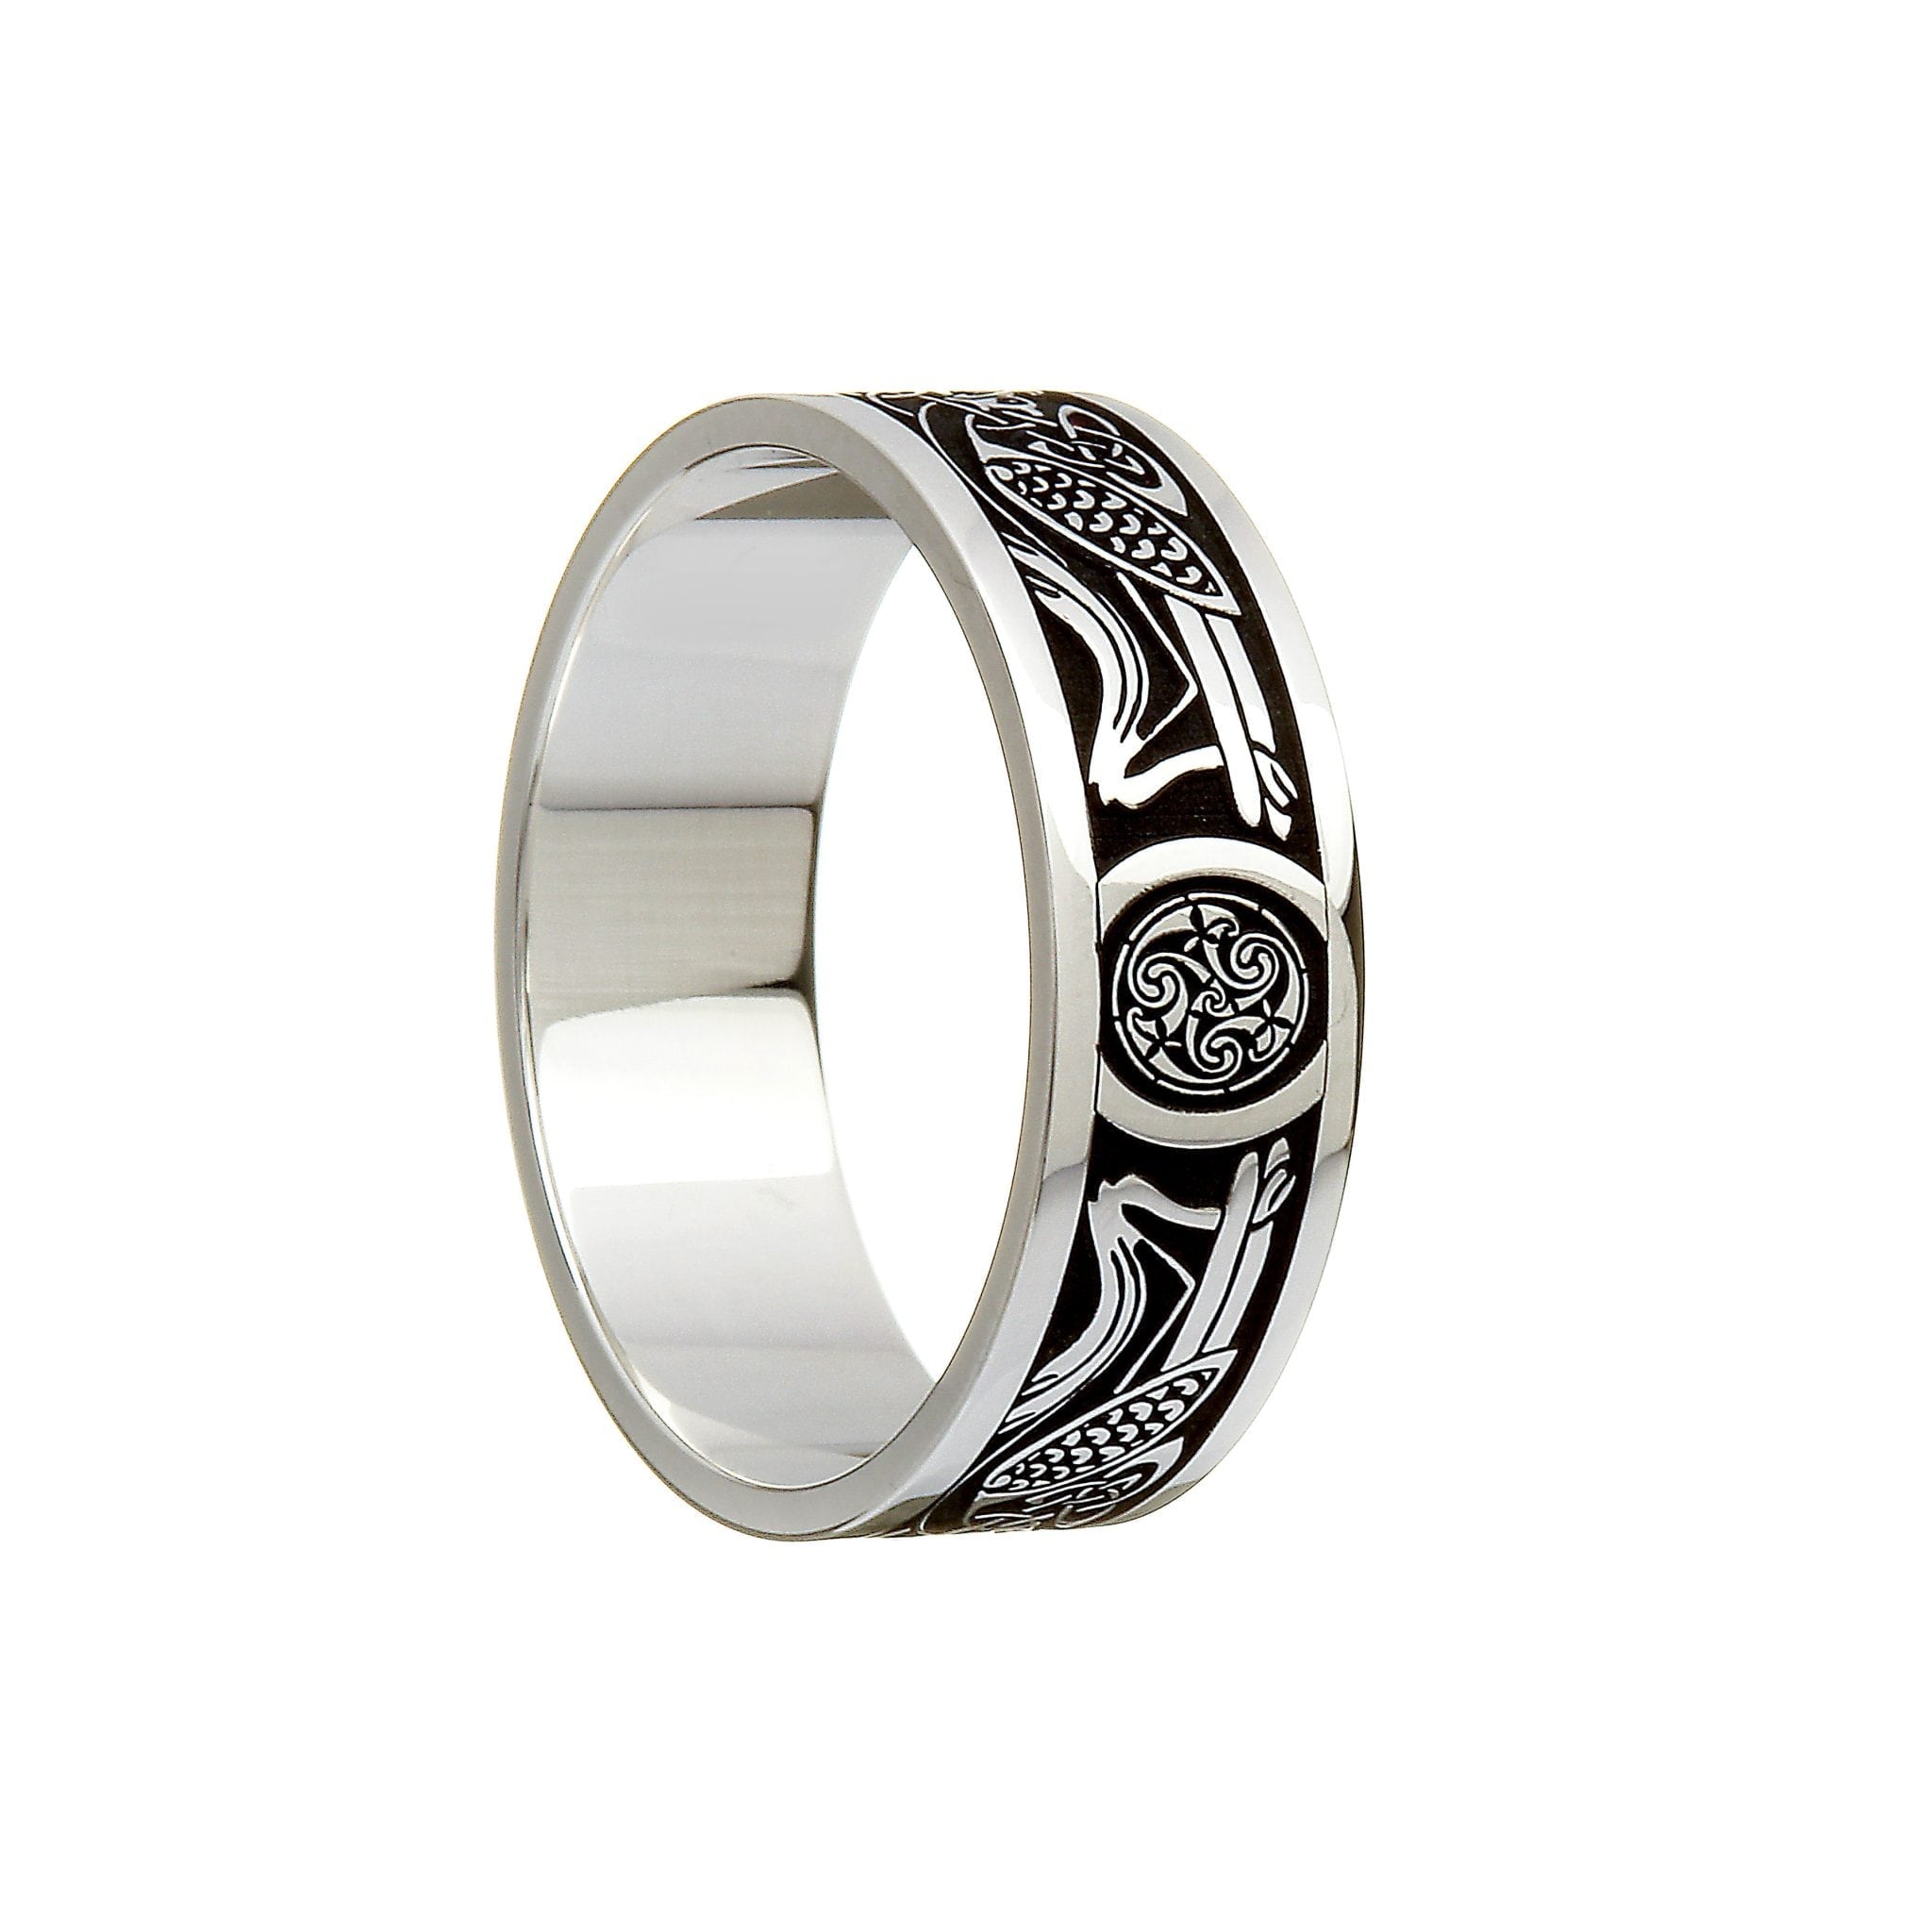 Book of Kells Wedding Ring - Wide - Celtic Jewelry by Boru